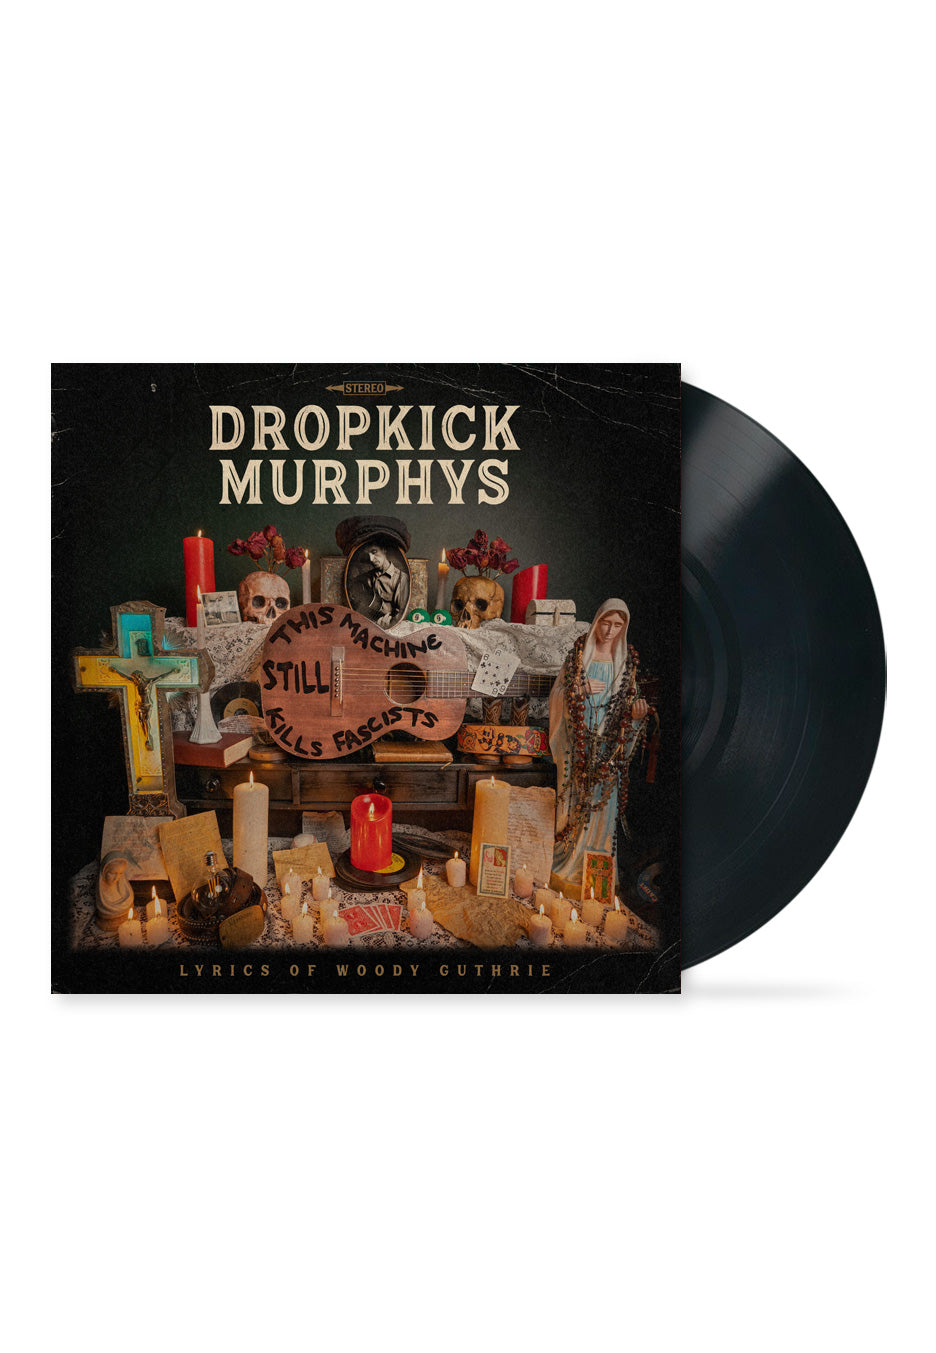 Dropkick Murphys feat. Woody Guthrie - This Machine Still Kills Fascists - Vinyl